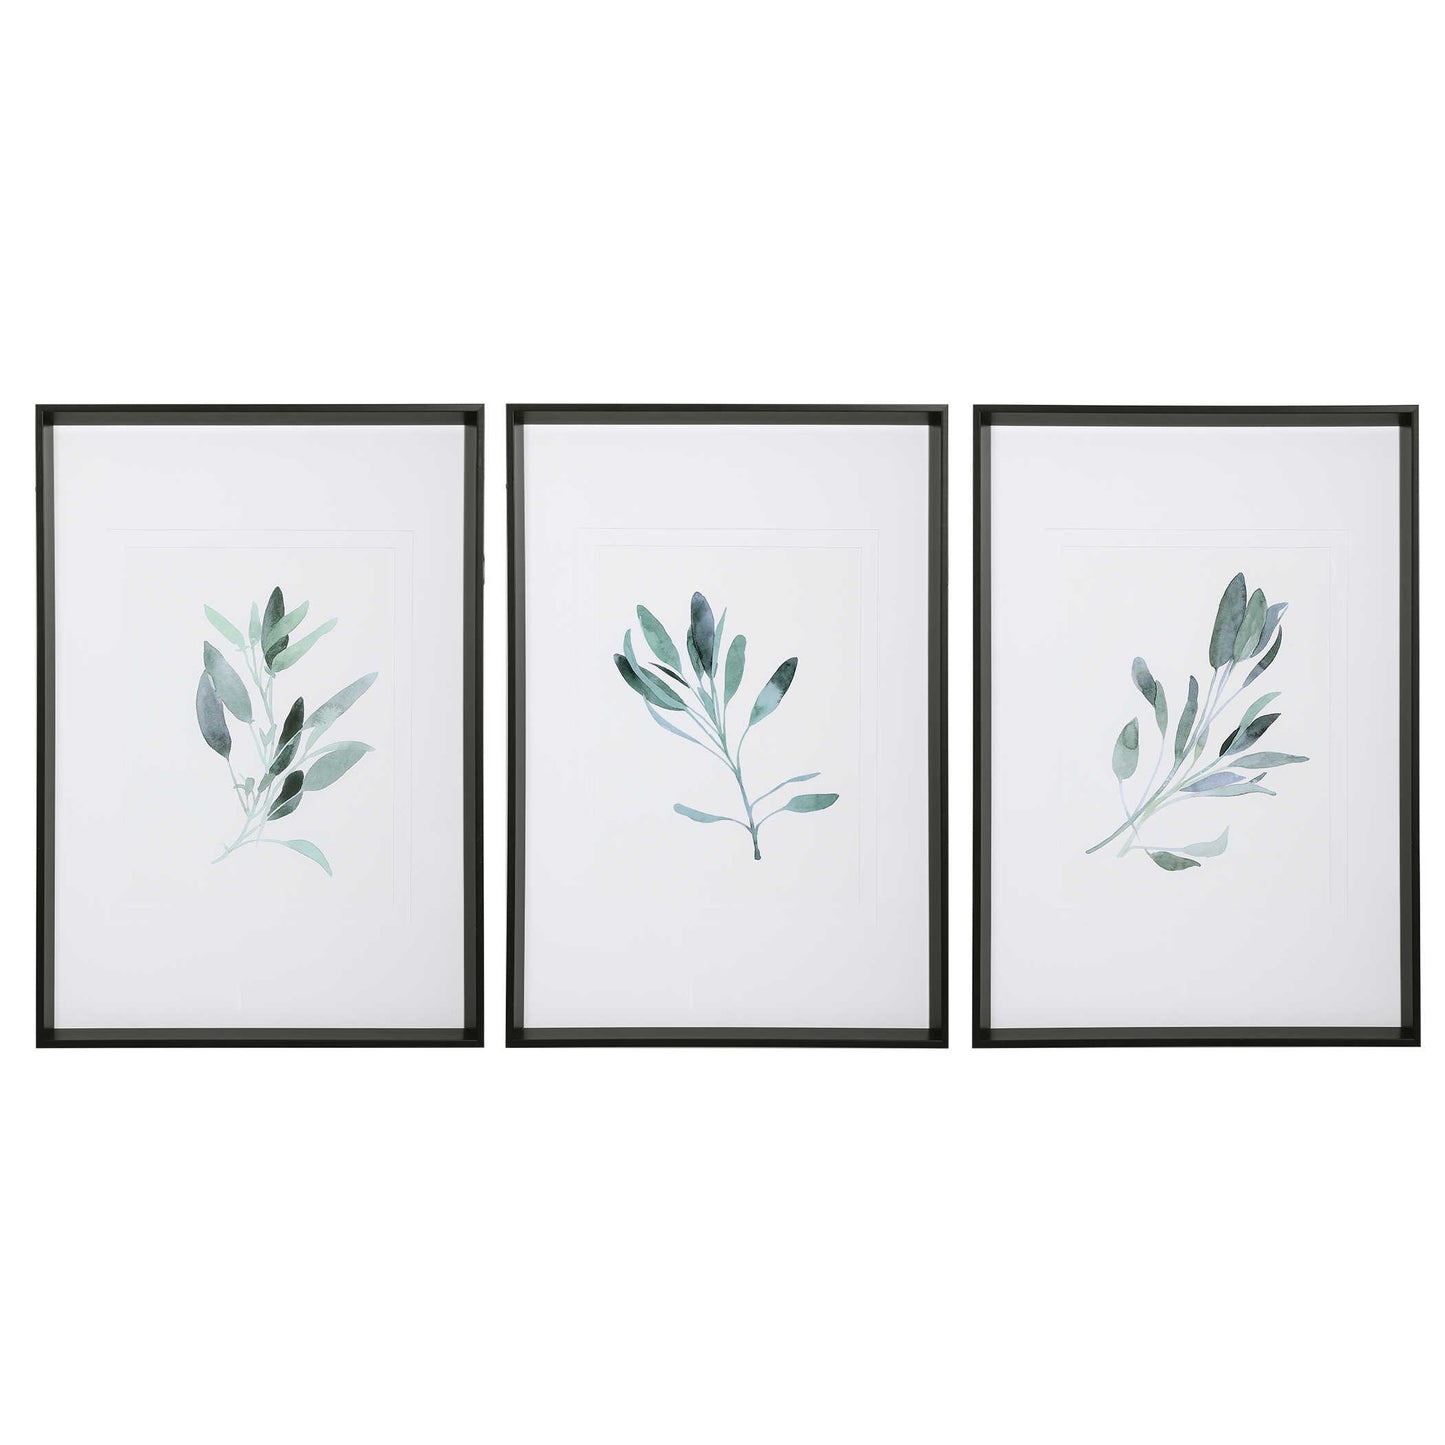 Set of three prints on white background. 